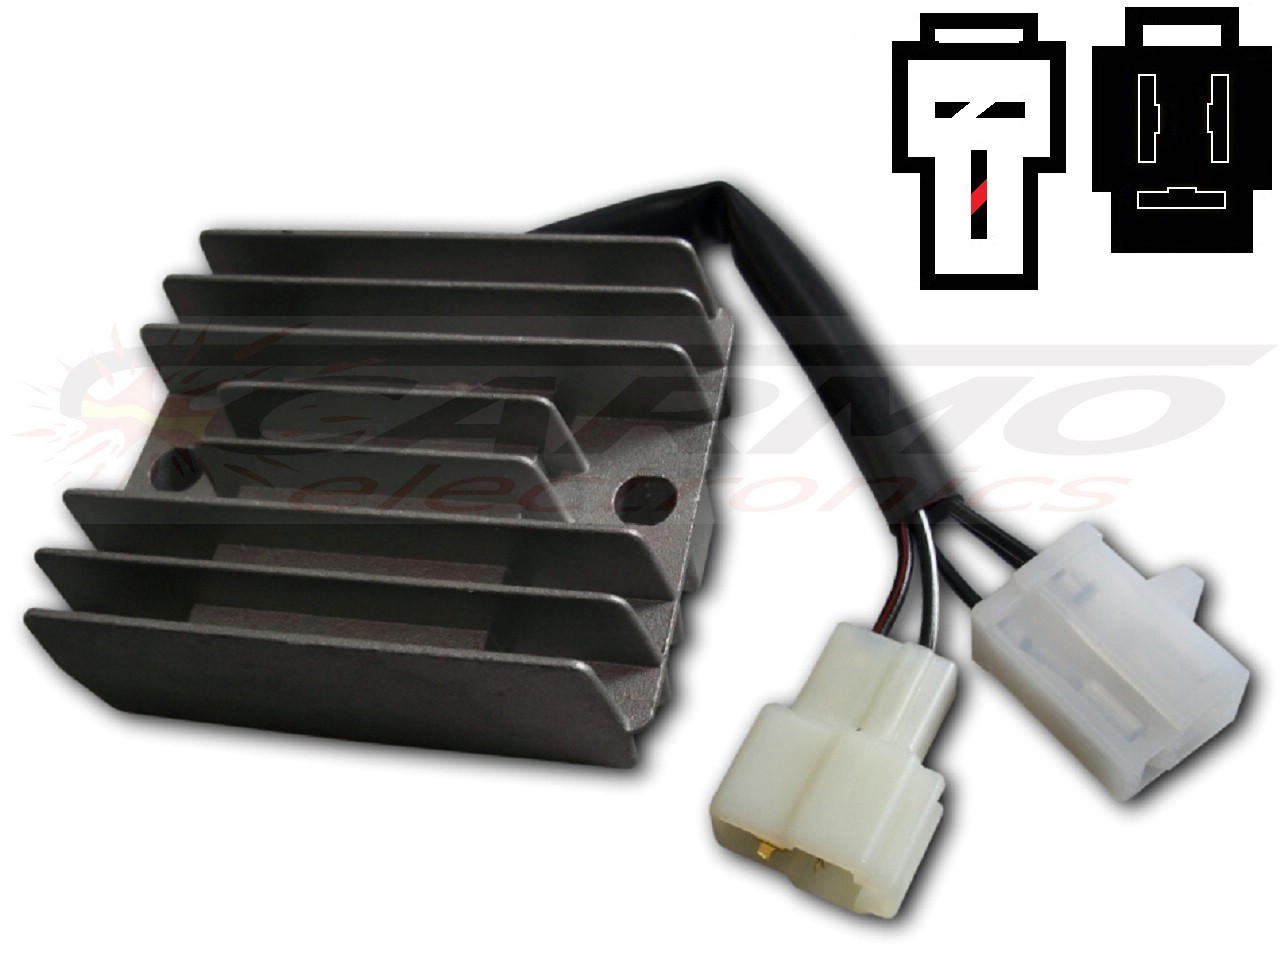 CARR201-SUZ - MOSFET Suzuki Burgman Gamma Voltage regulator rectifier (HB572A-12M2, SH572MB) - Clique na Imagem para Fechar